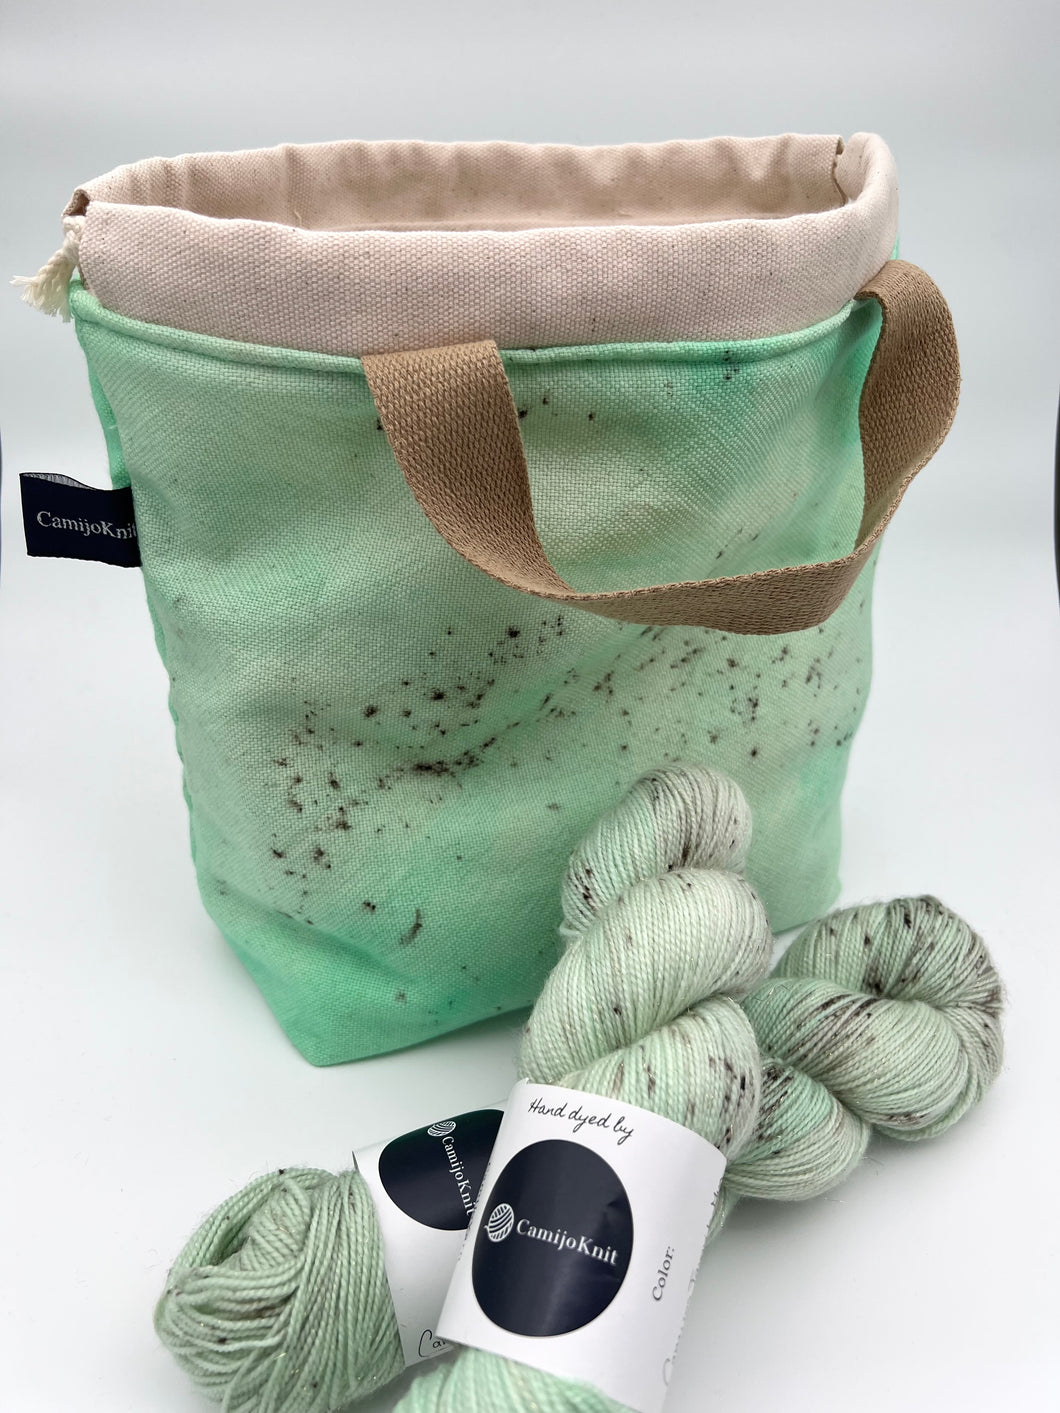 Hand dyed CamijoKnit Project Bag: Camijos Favorite Mug